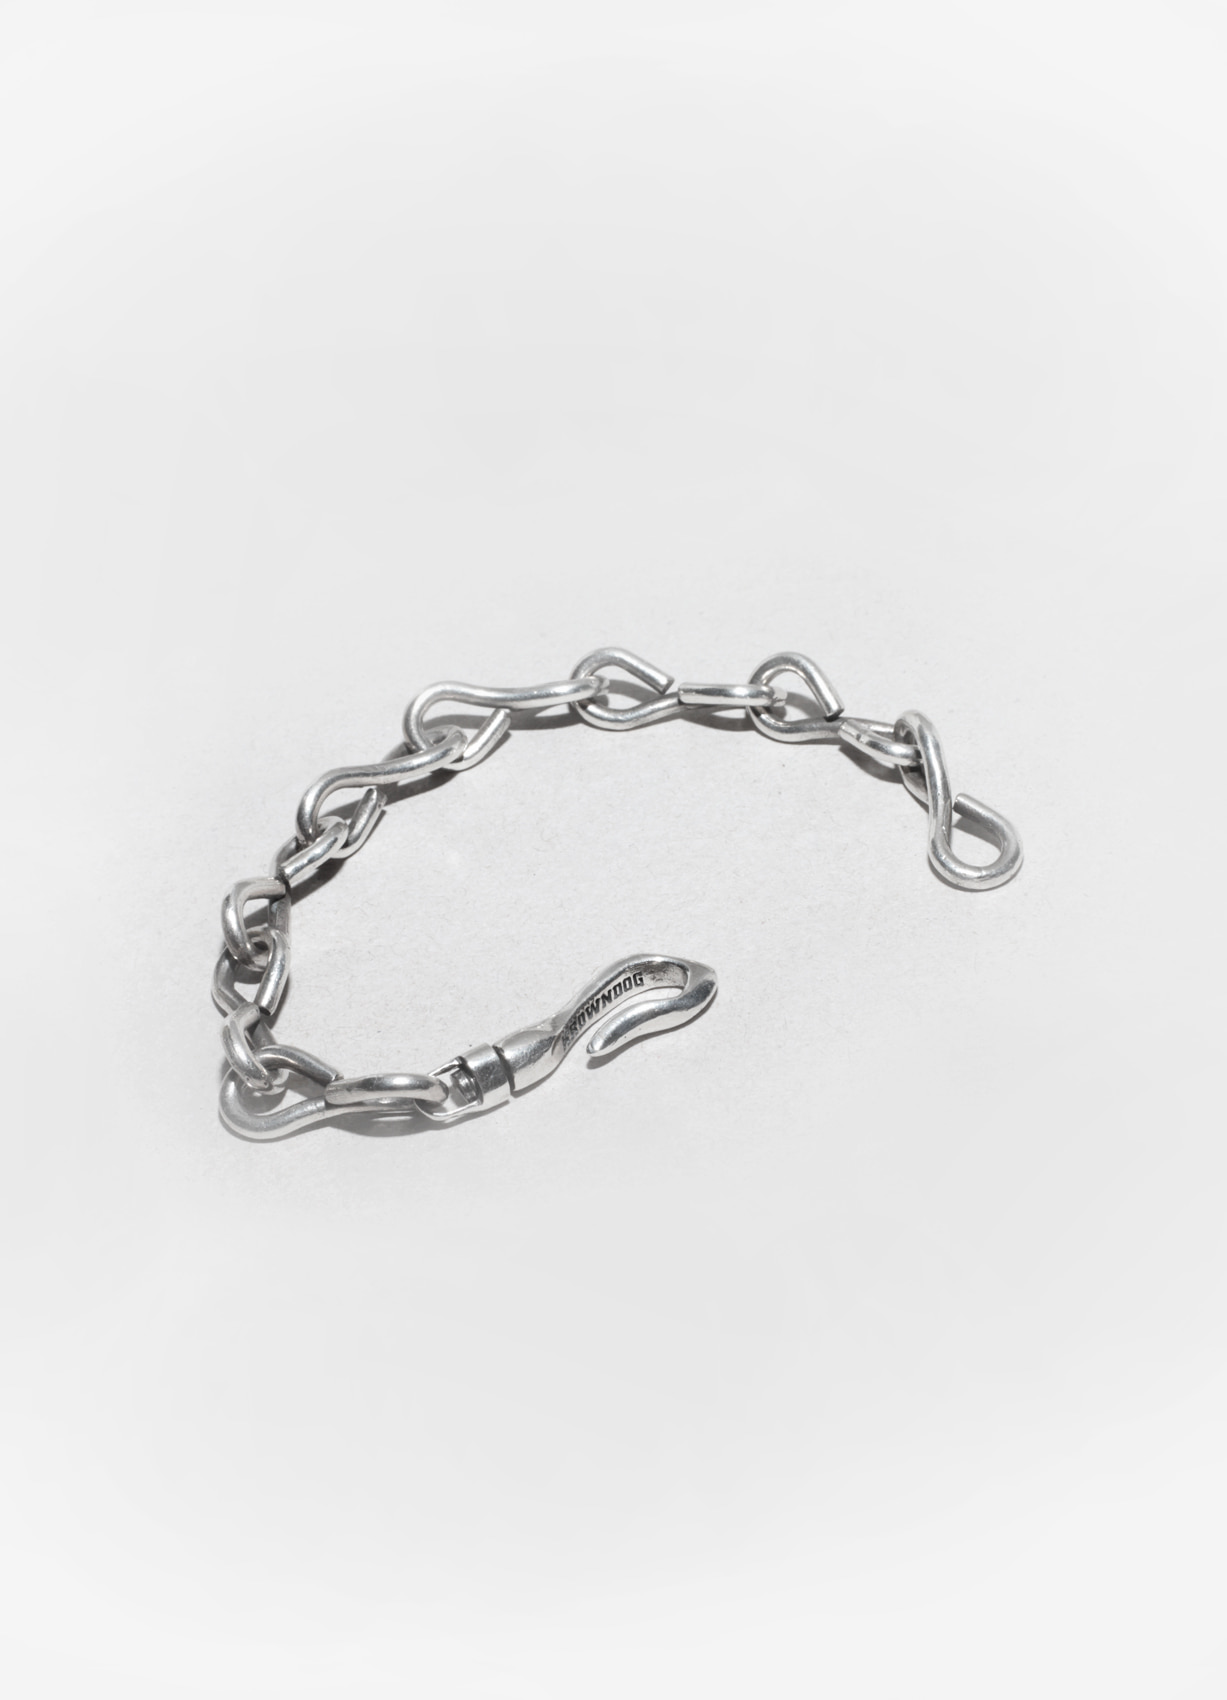 Hook chain_8